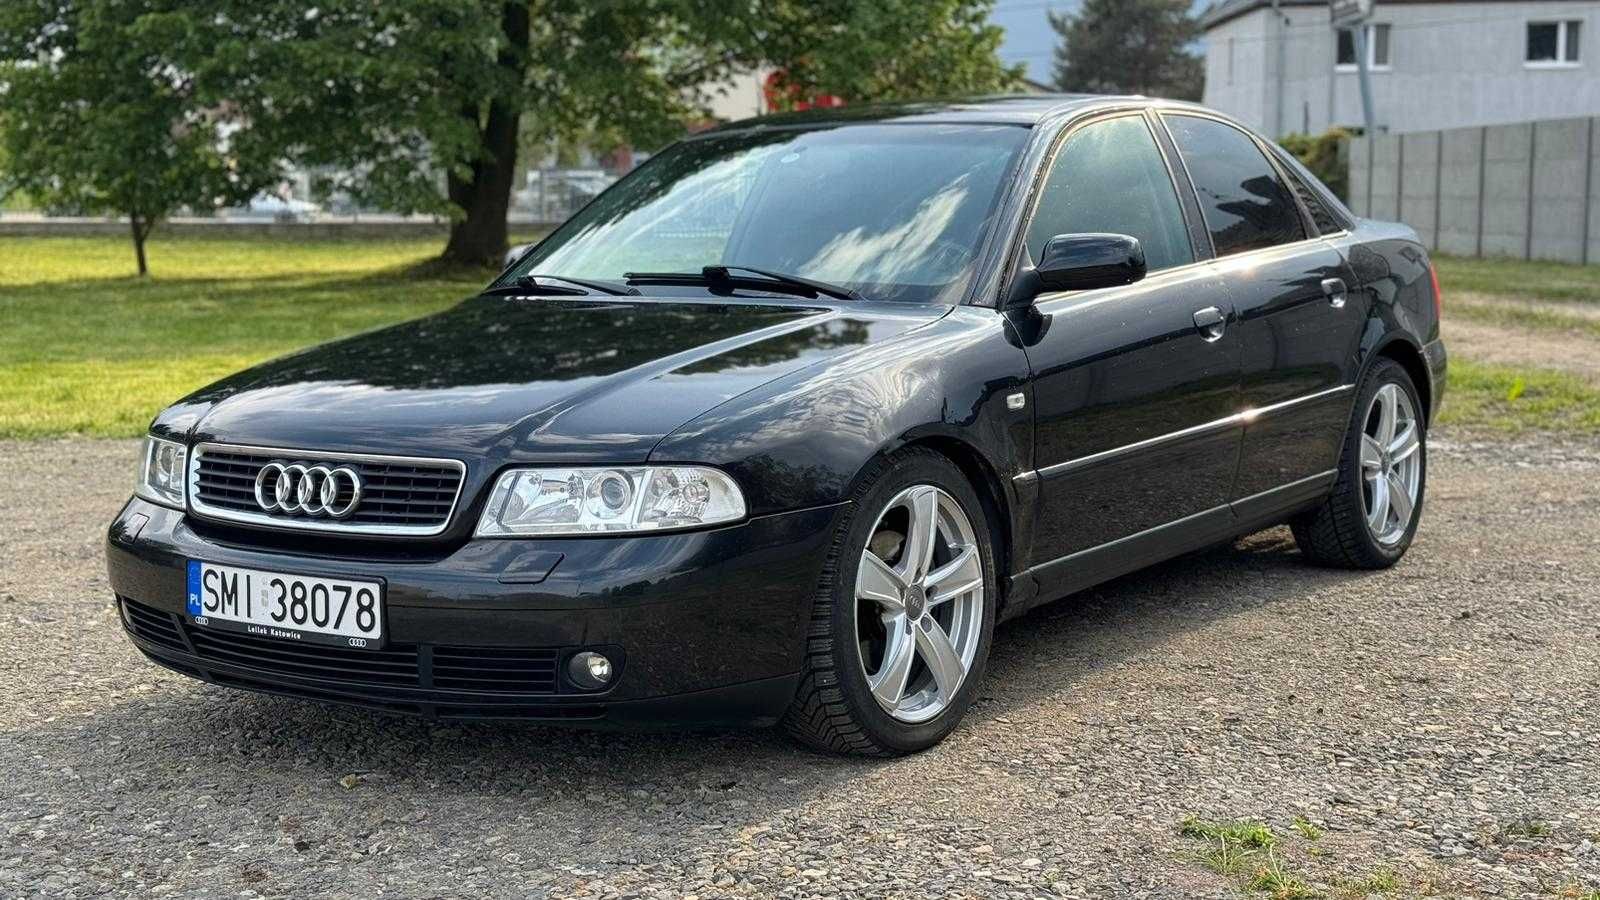 Audi A4 1.8T 150 km